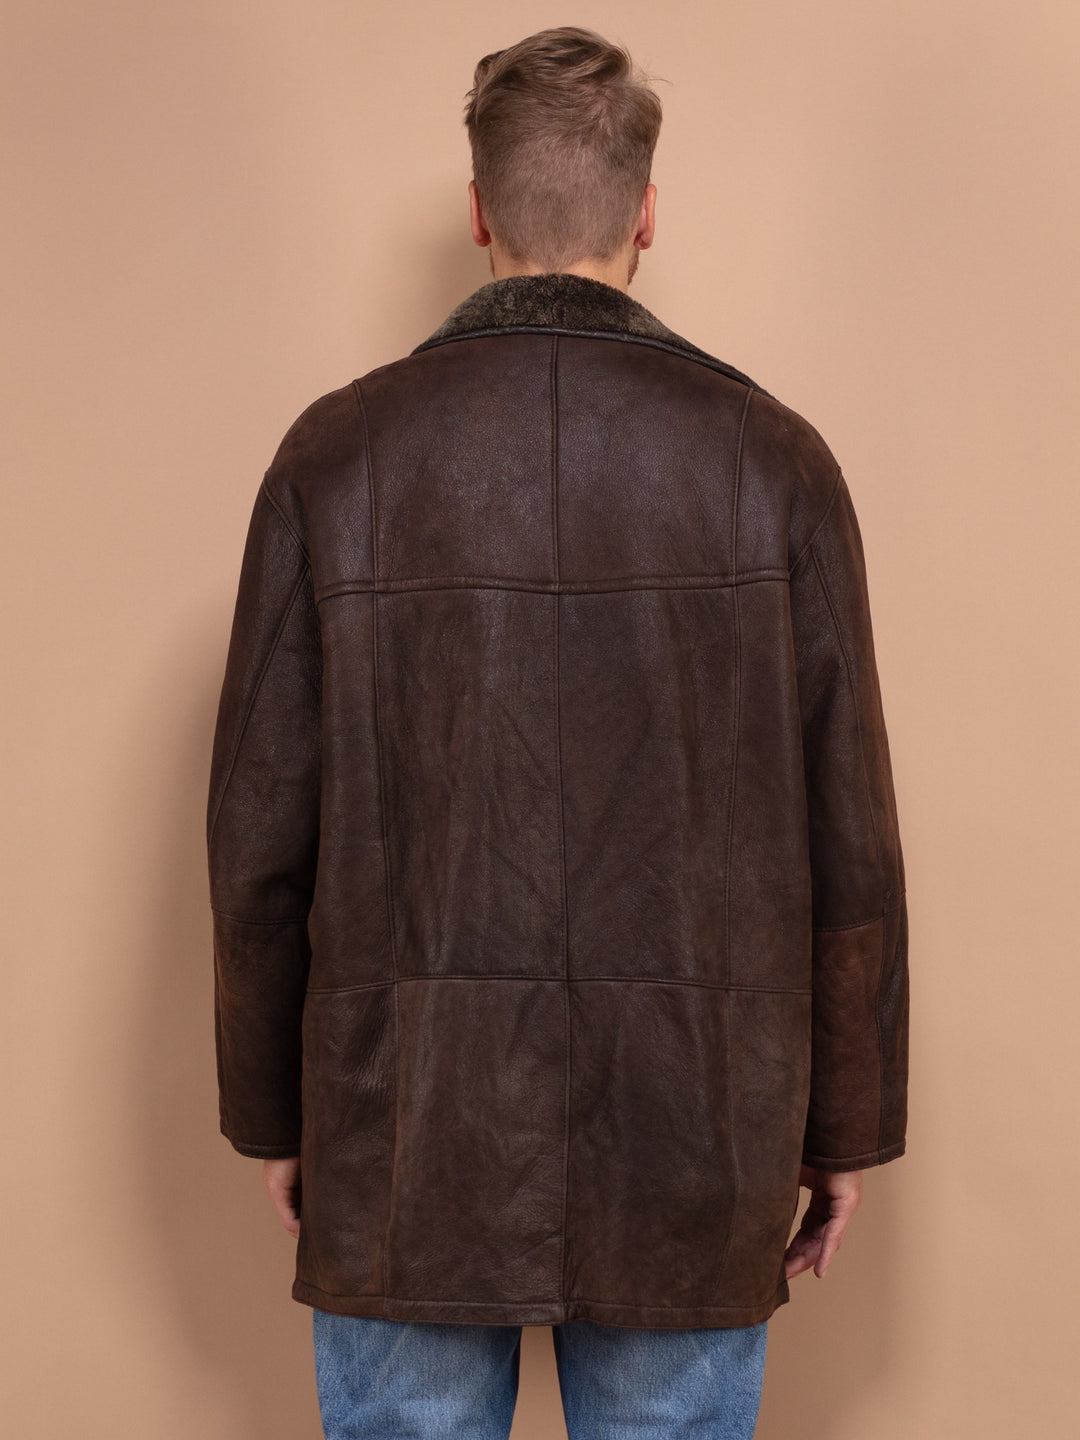 Sheepskin Leather Coat Men, Classic Shearling Overcoat XL, Brown Leather Coat, Classic 80's Coat, Second Hand Shearling Coat, Repurposed